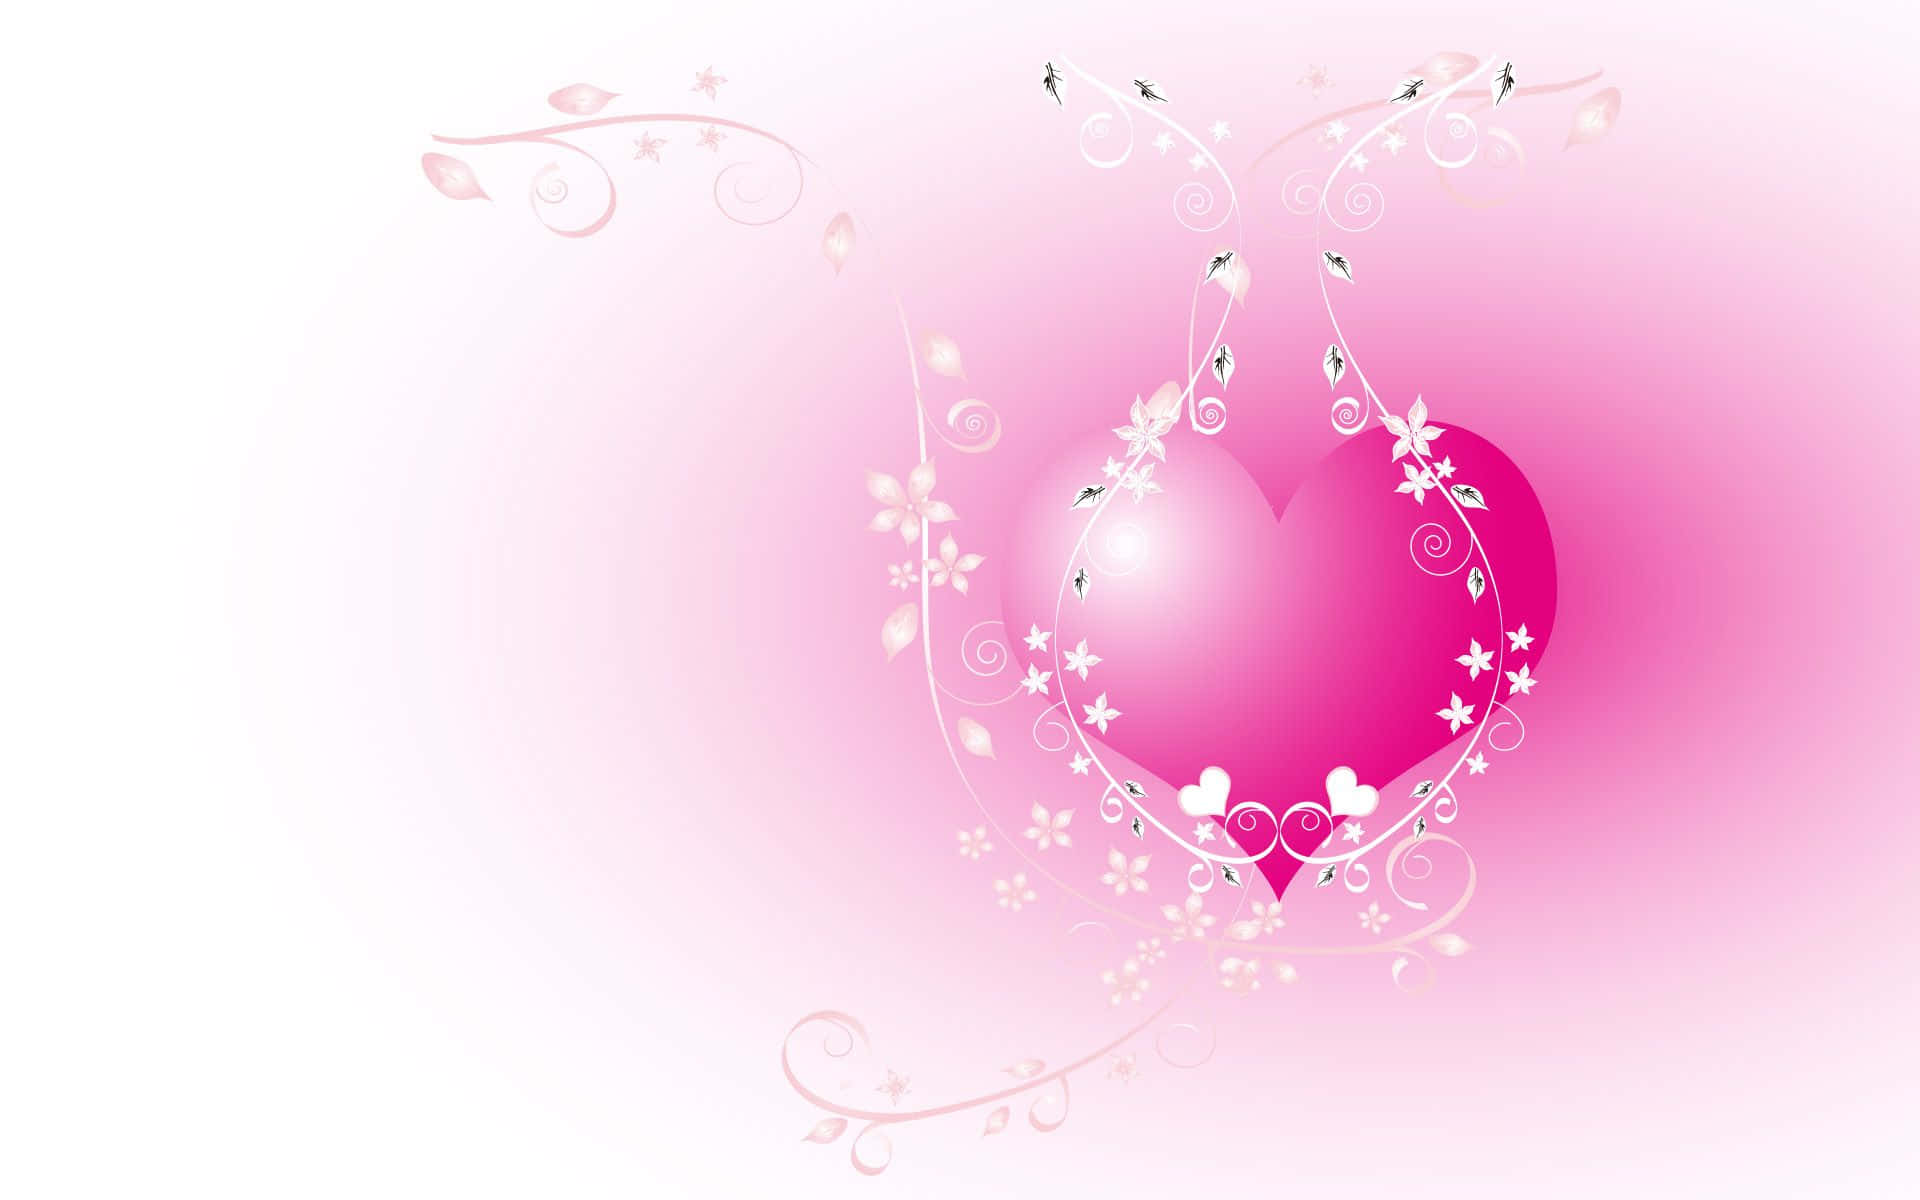 En pink hjerte med blomster designs på det. Wallpaper